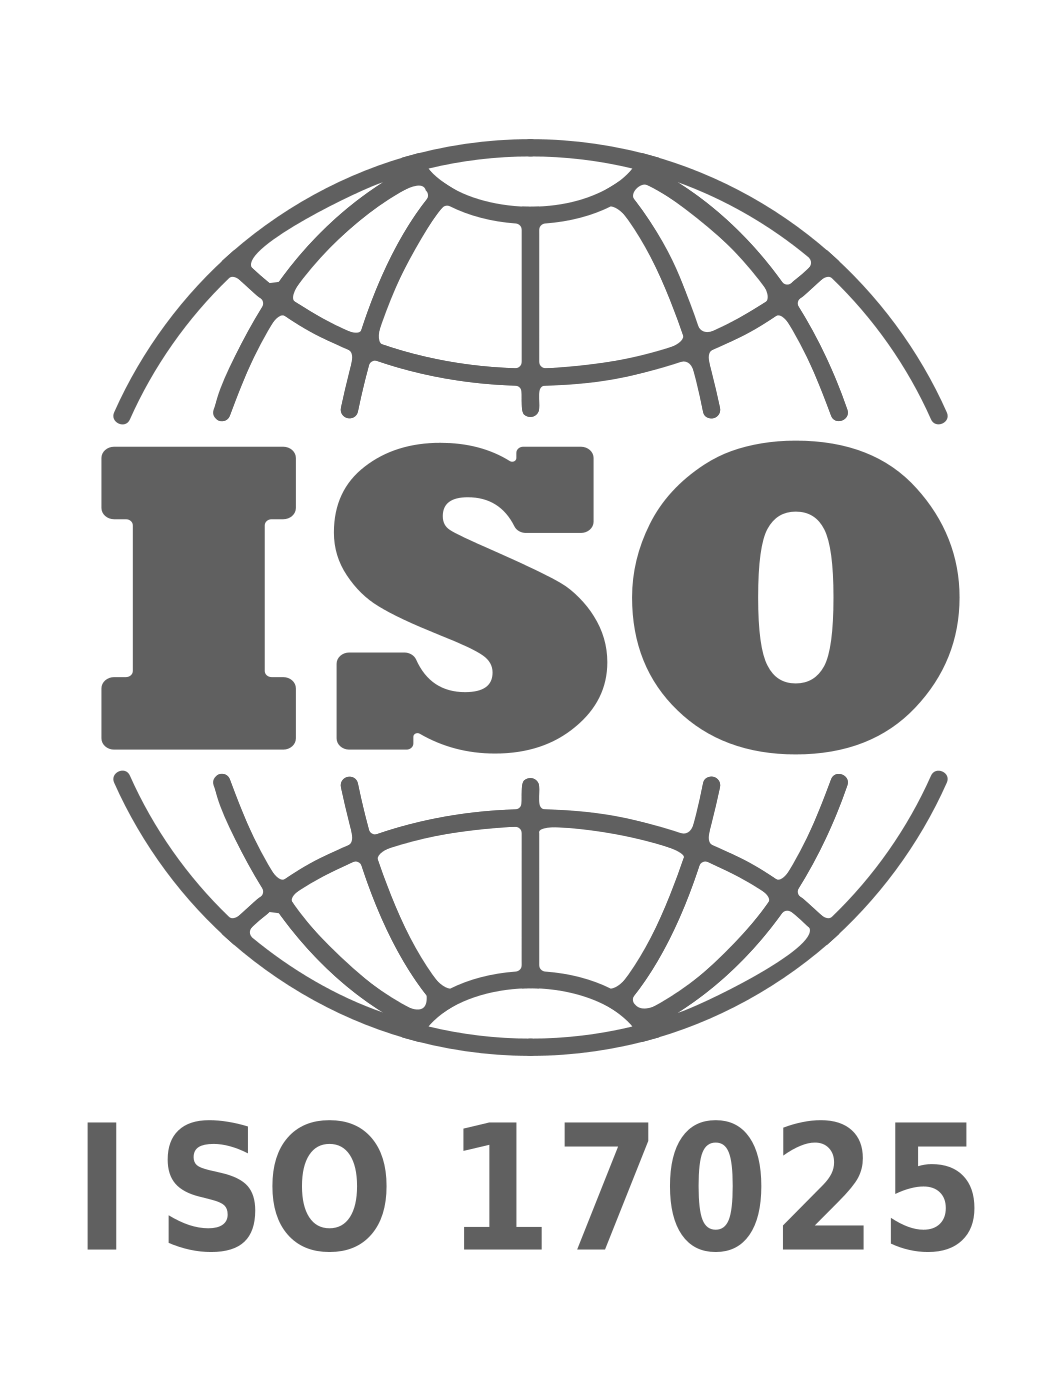 ISO 17025 Logo for ISO 17025 accreditation